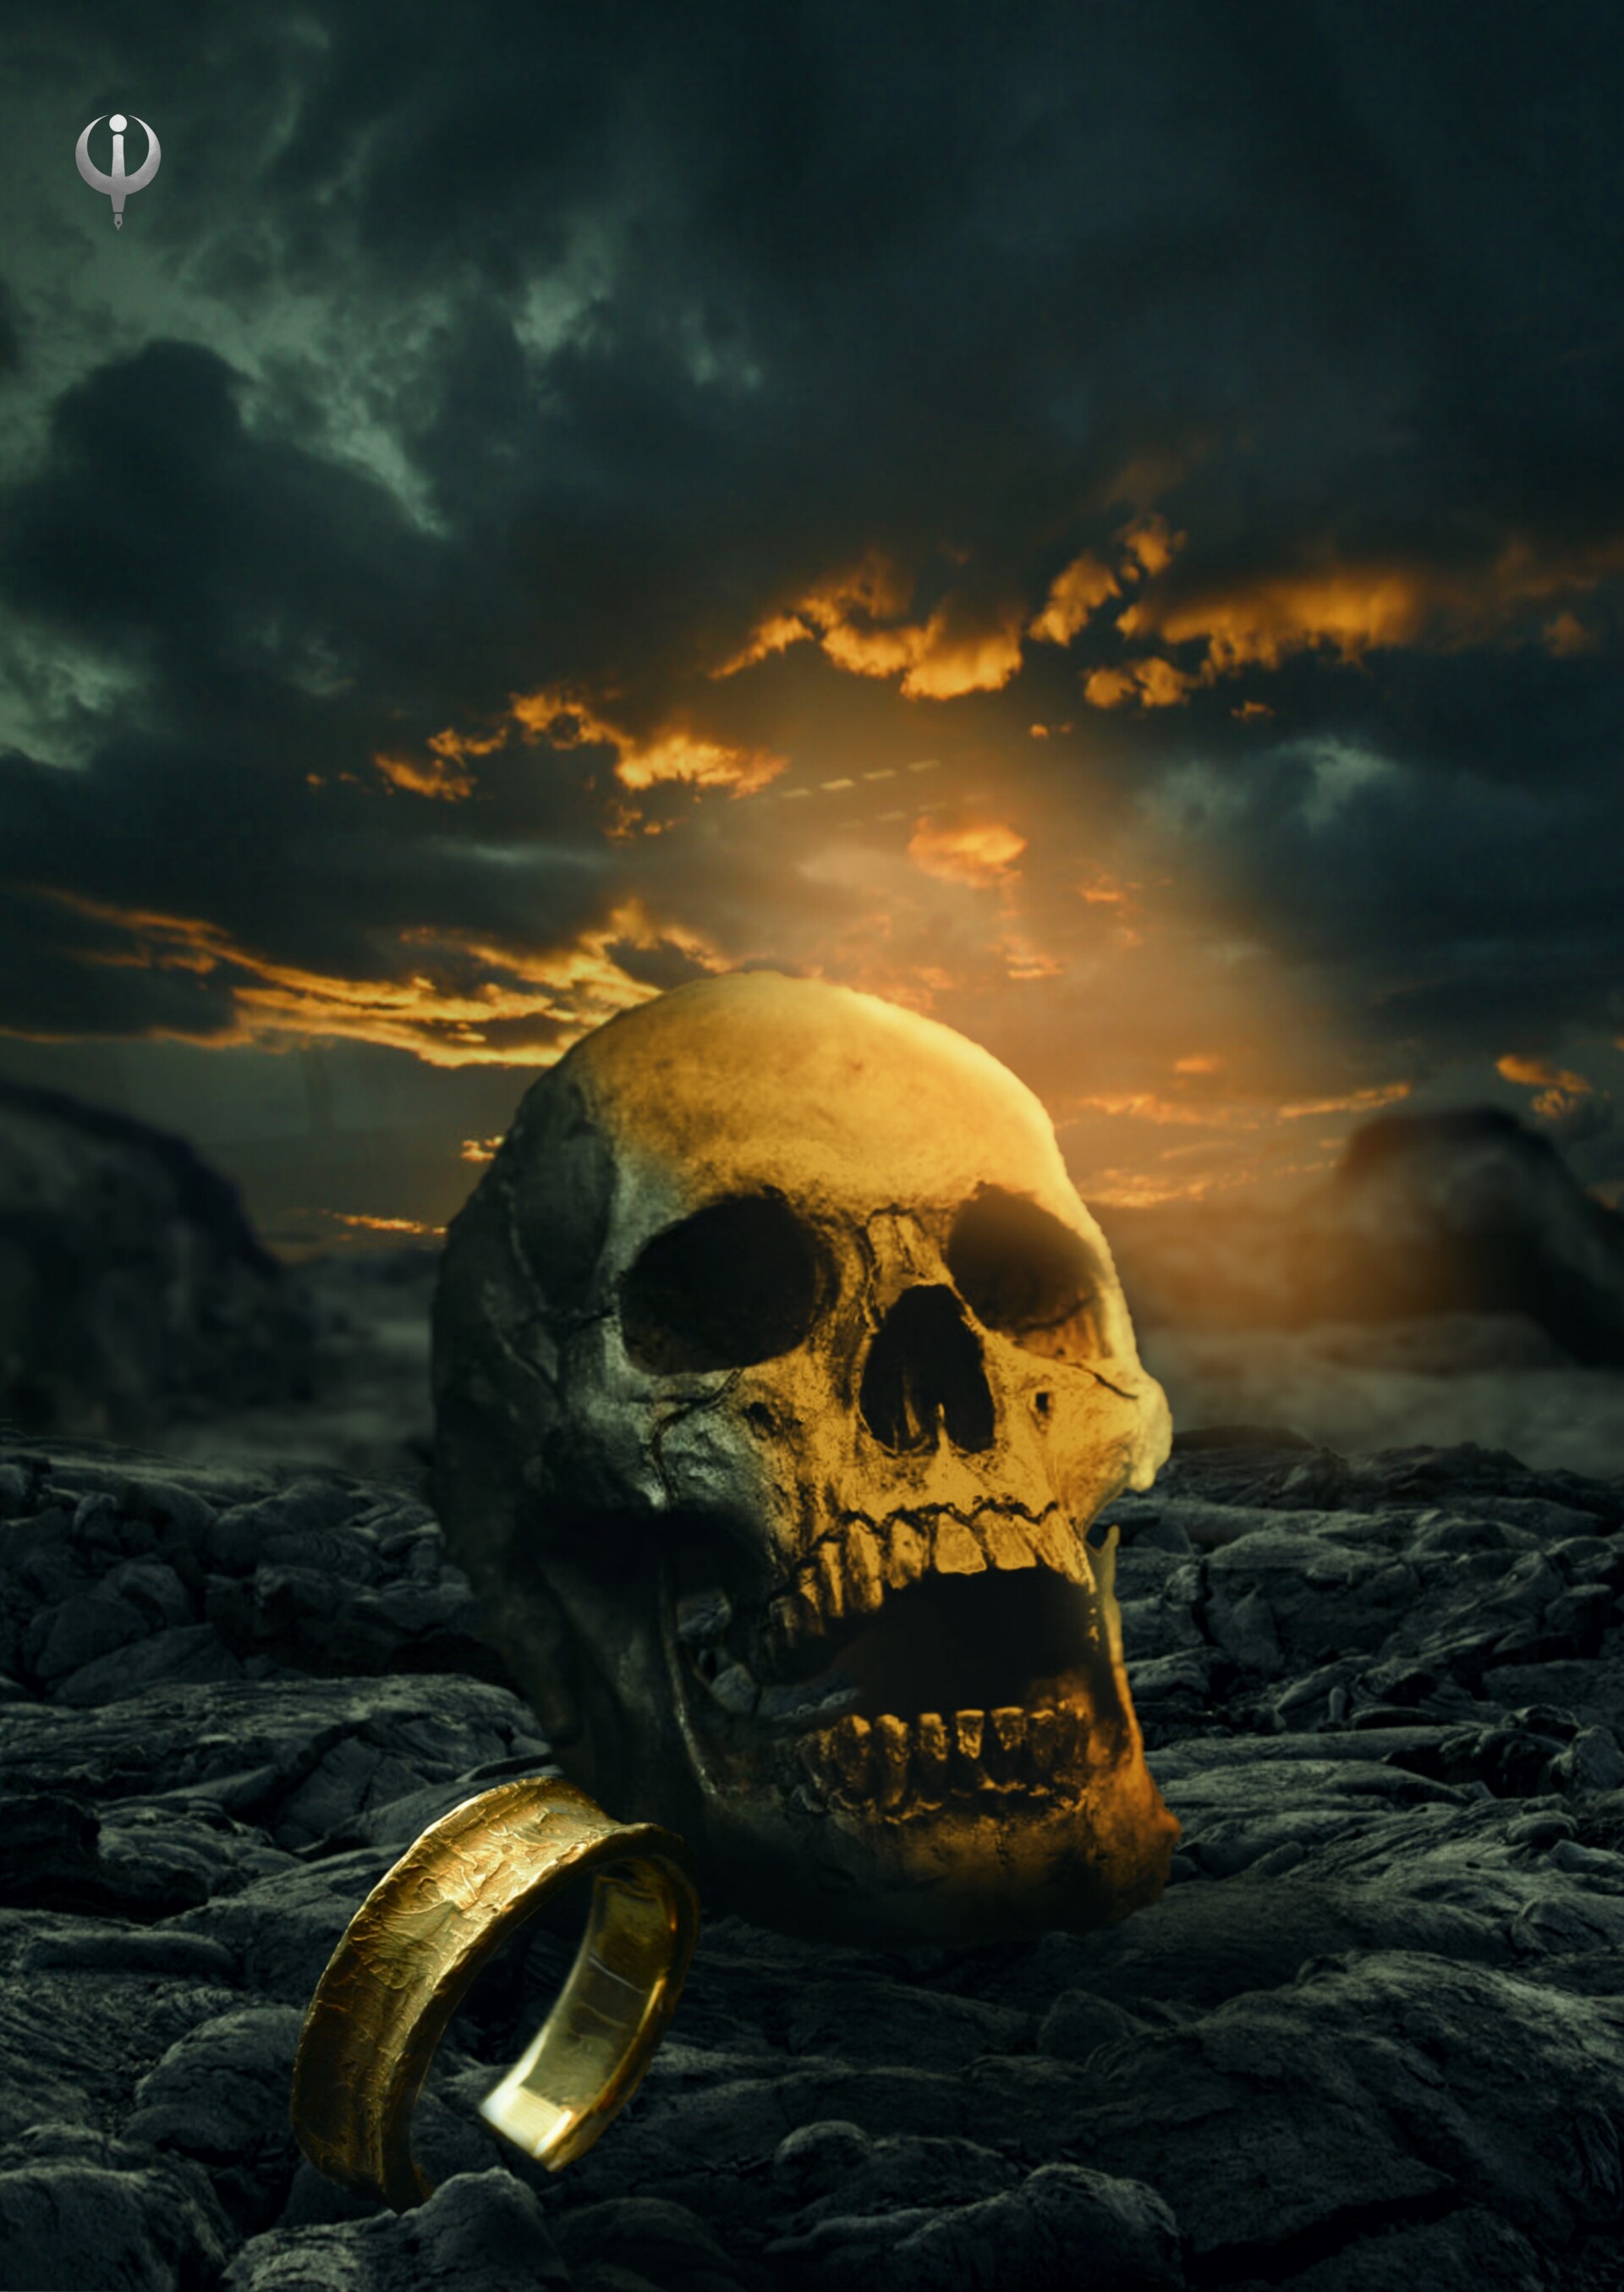 6357 Gold Human Skull Images Stock Photos  Vectors  Shutterstock